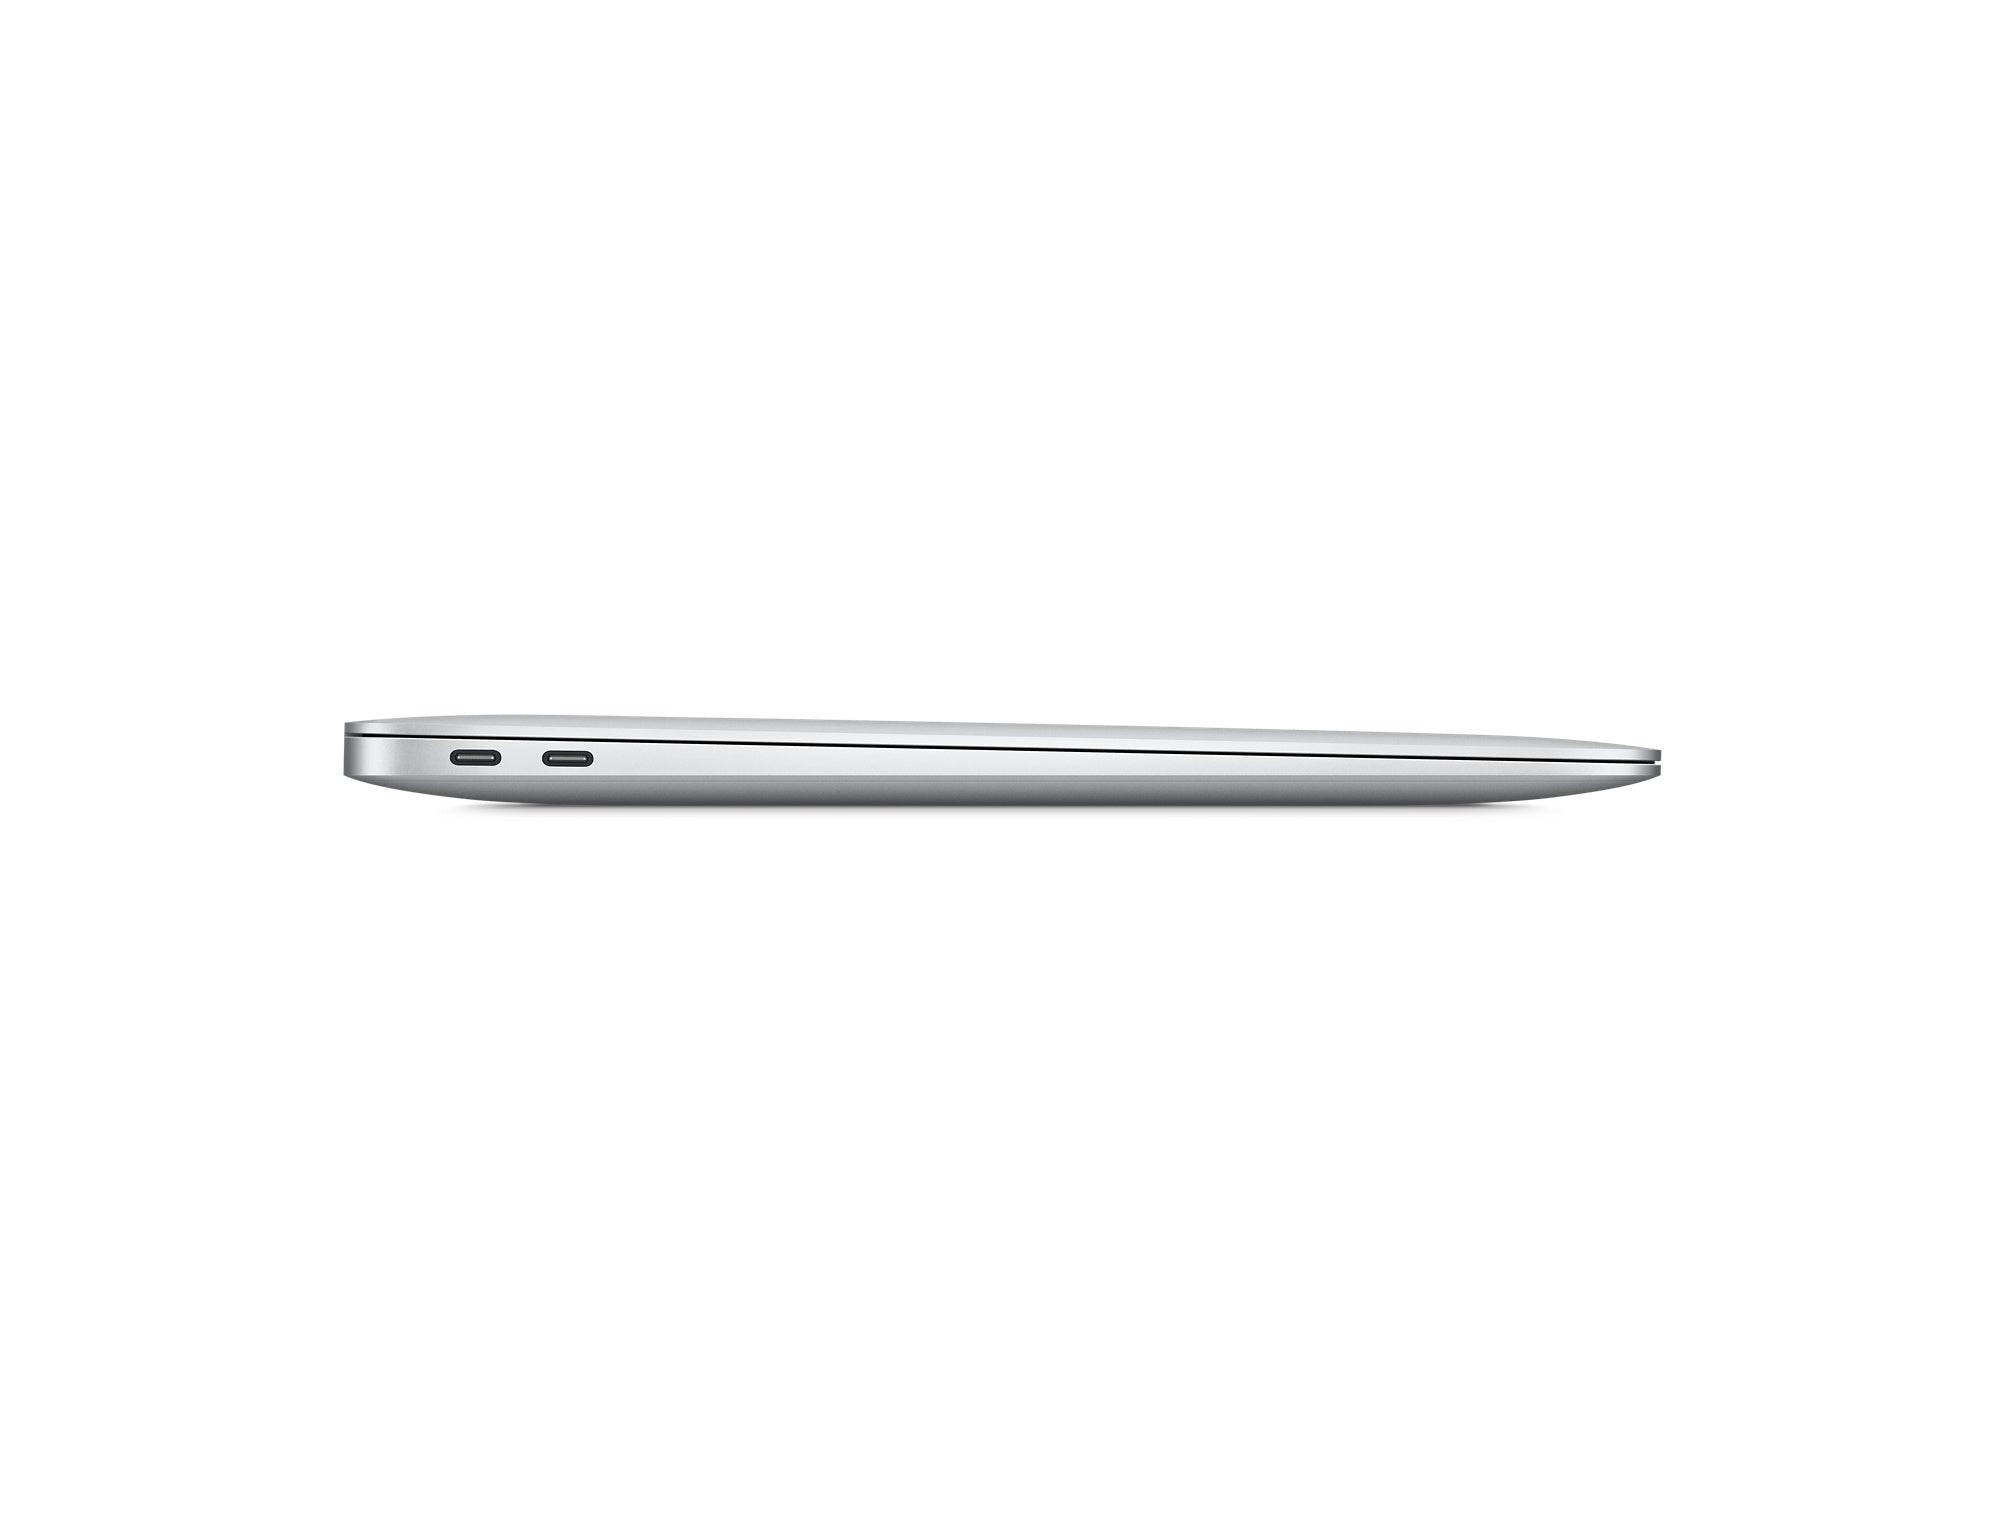 Apple MacBook Air (13-inch Retina Display, 8GB RAM, 256GB SSD Storage) -  Space Gray (Previous Model)